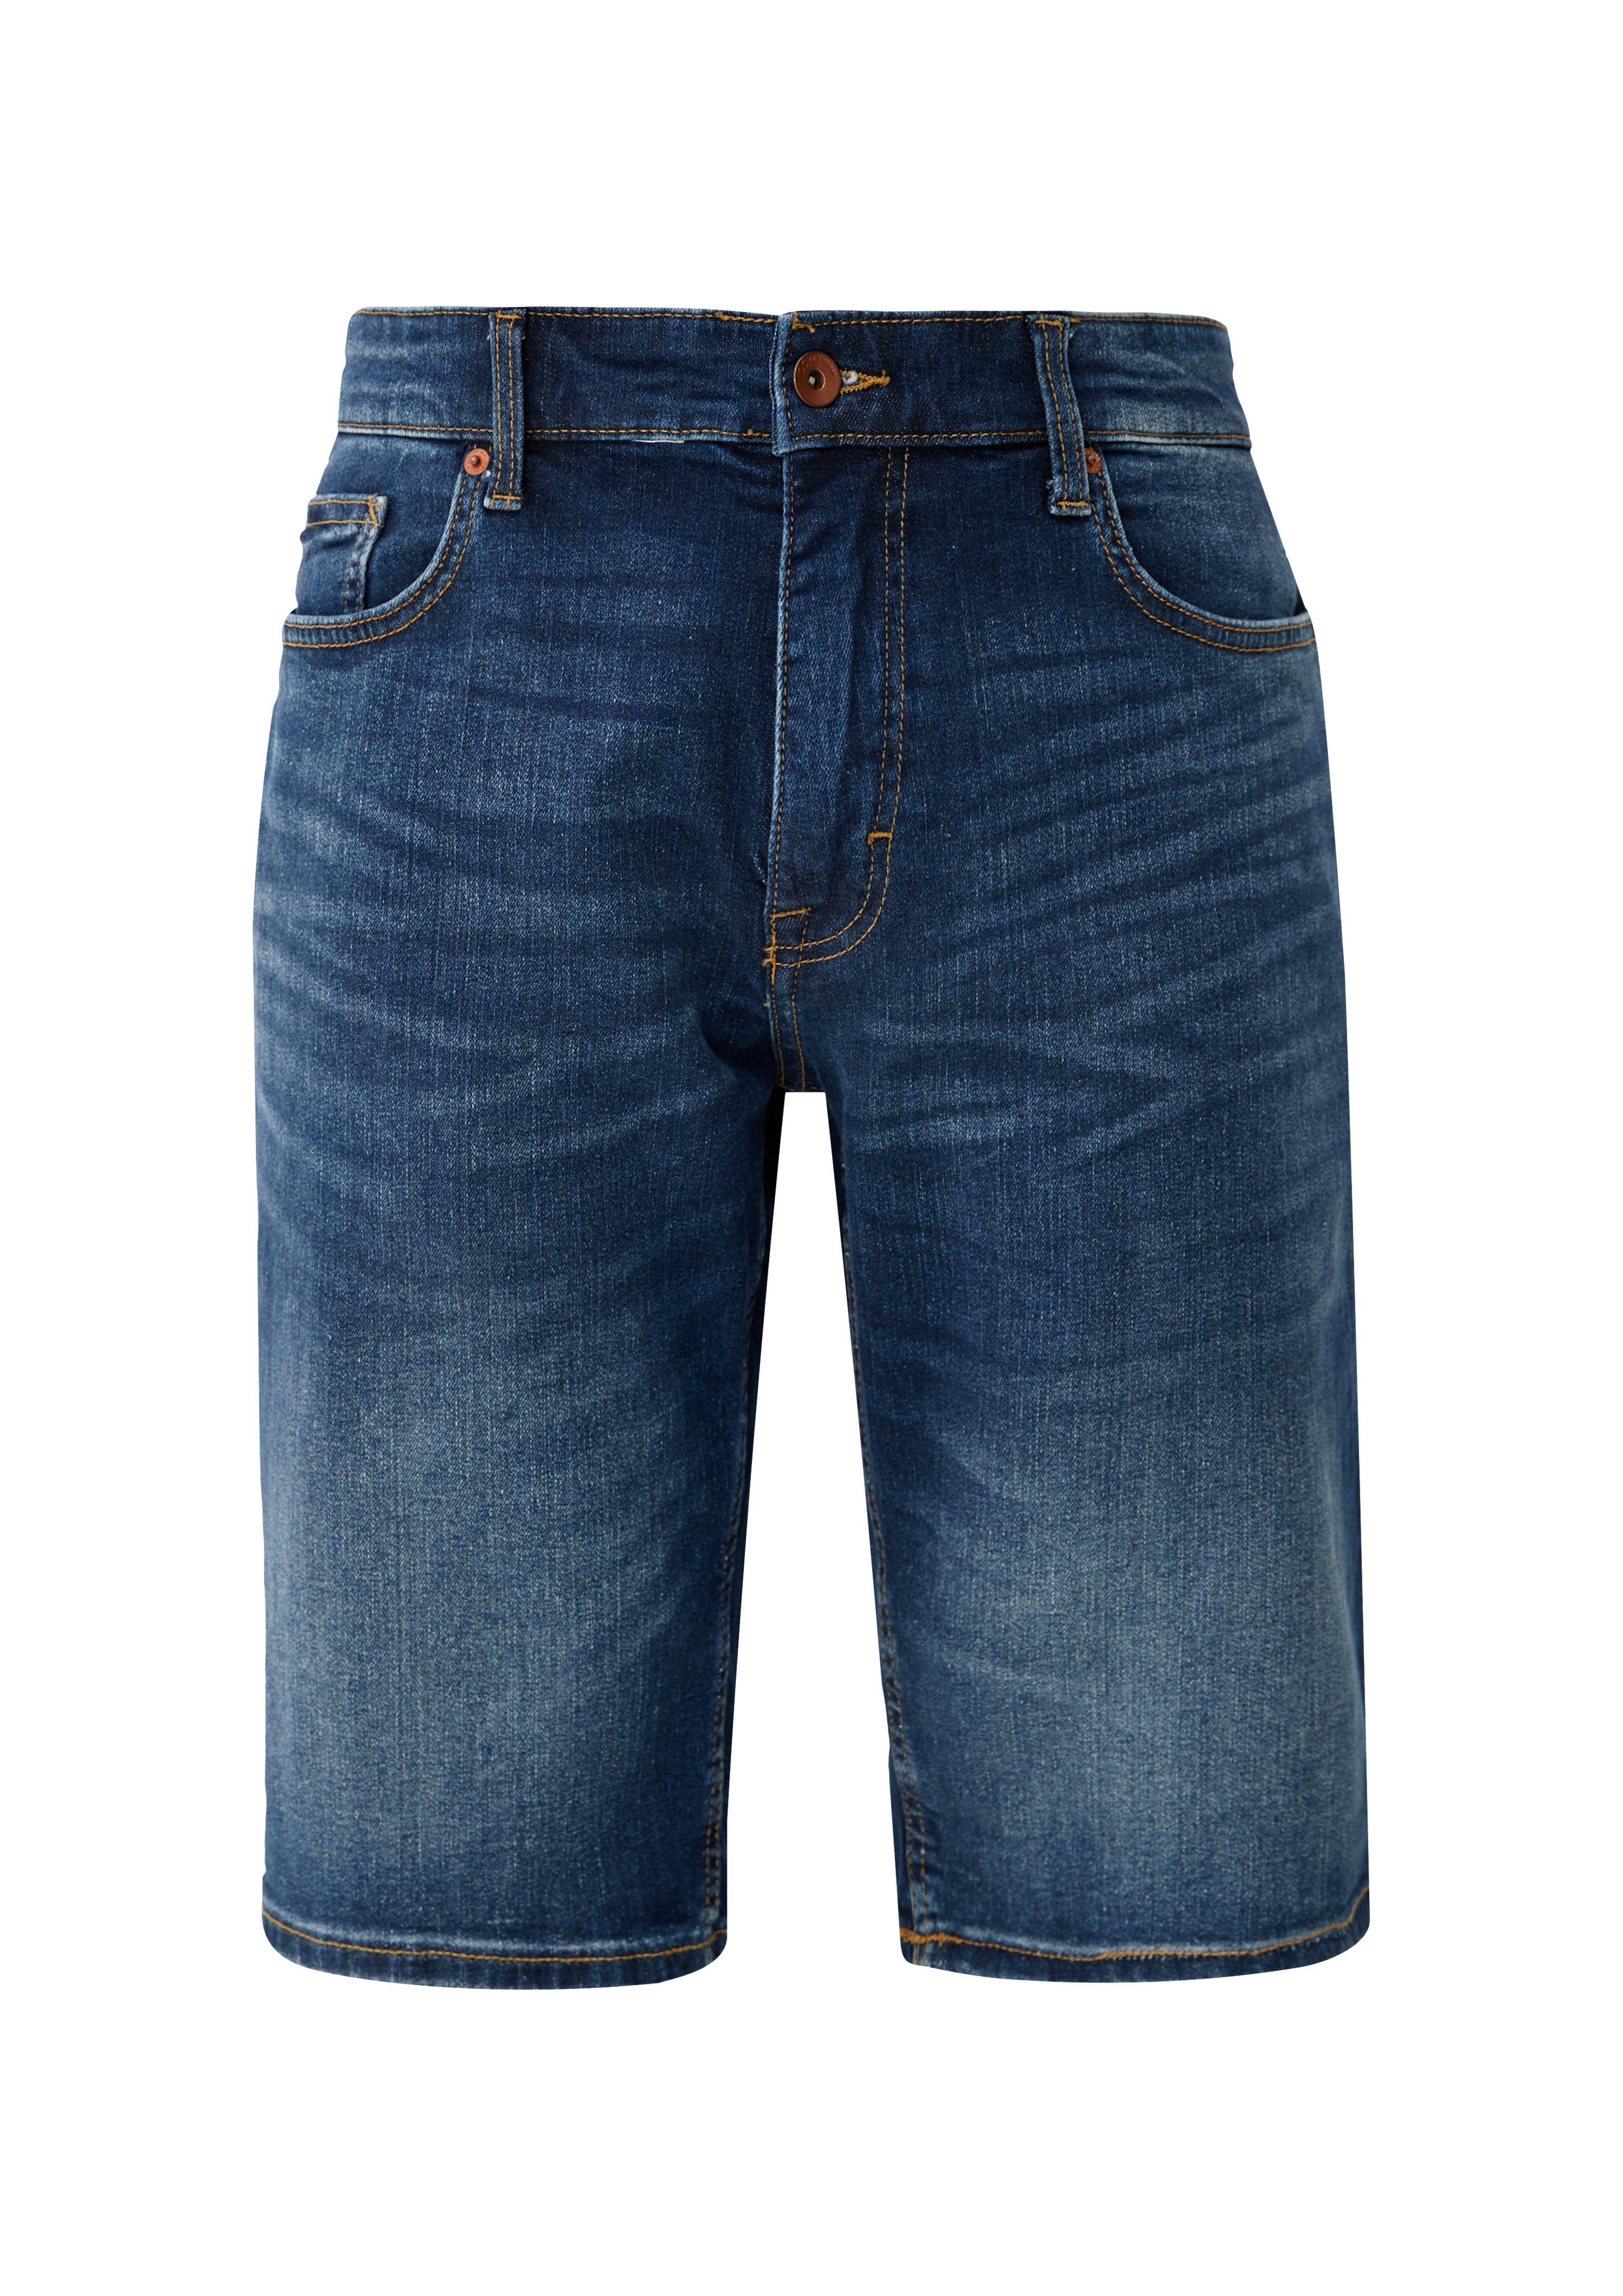 / Waschung Fit Jeans-Bermuda Jeansshorts Regular Rise Mid Leg / John QS / dunkelblau Straight